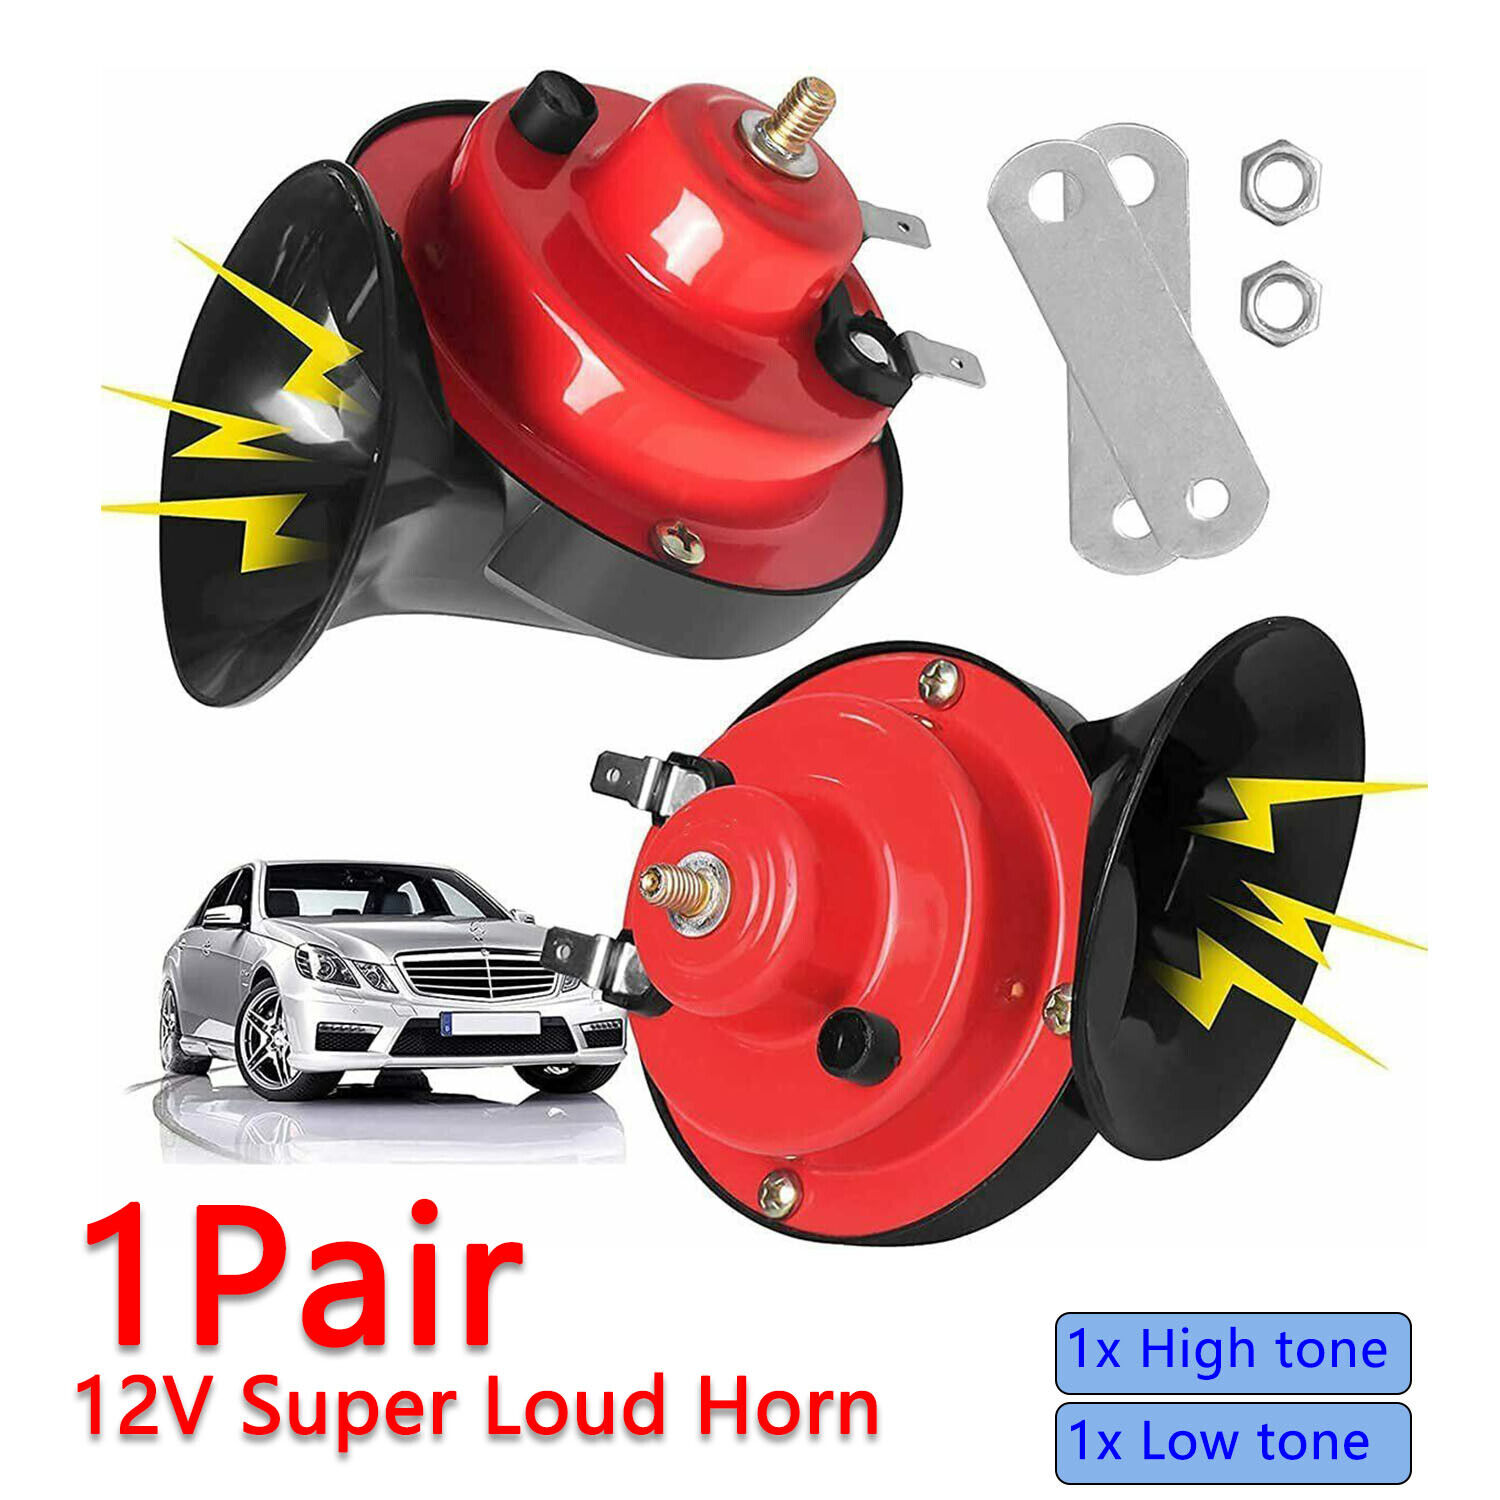 1Pair 12V Universa Super Loud car Horn for family car bus